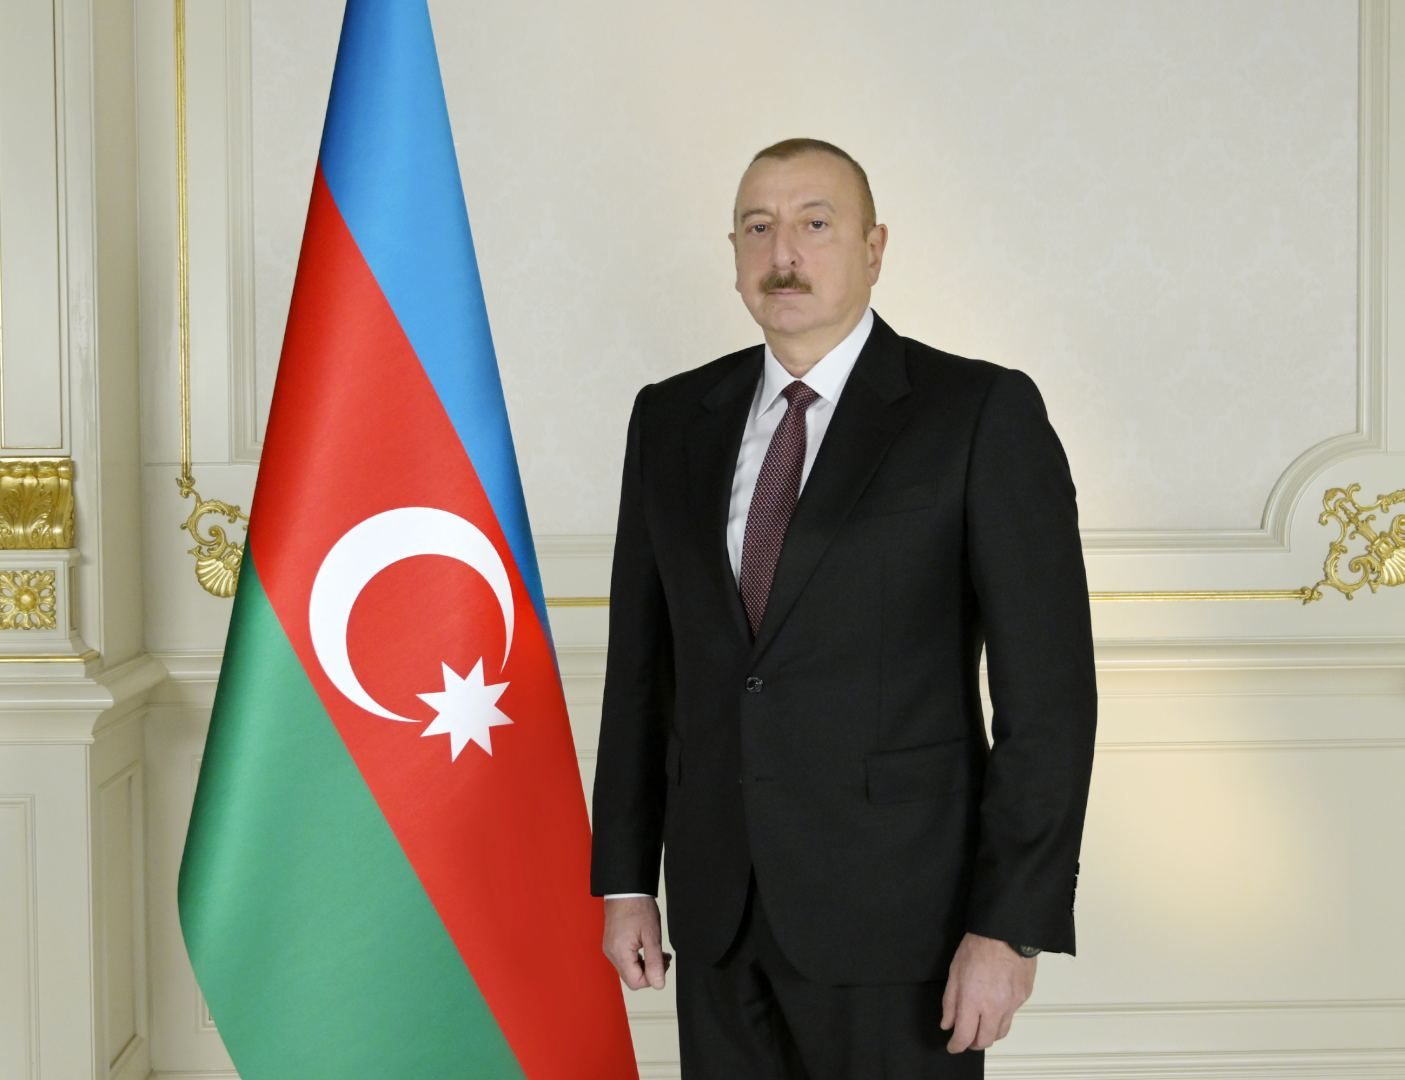 President of the Republic of Srpska congratulates President Ilham Aliyev